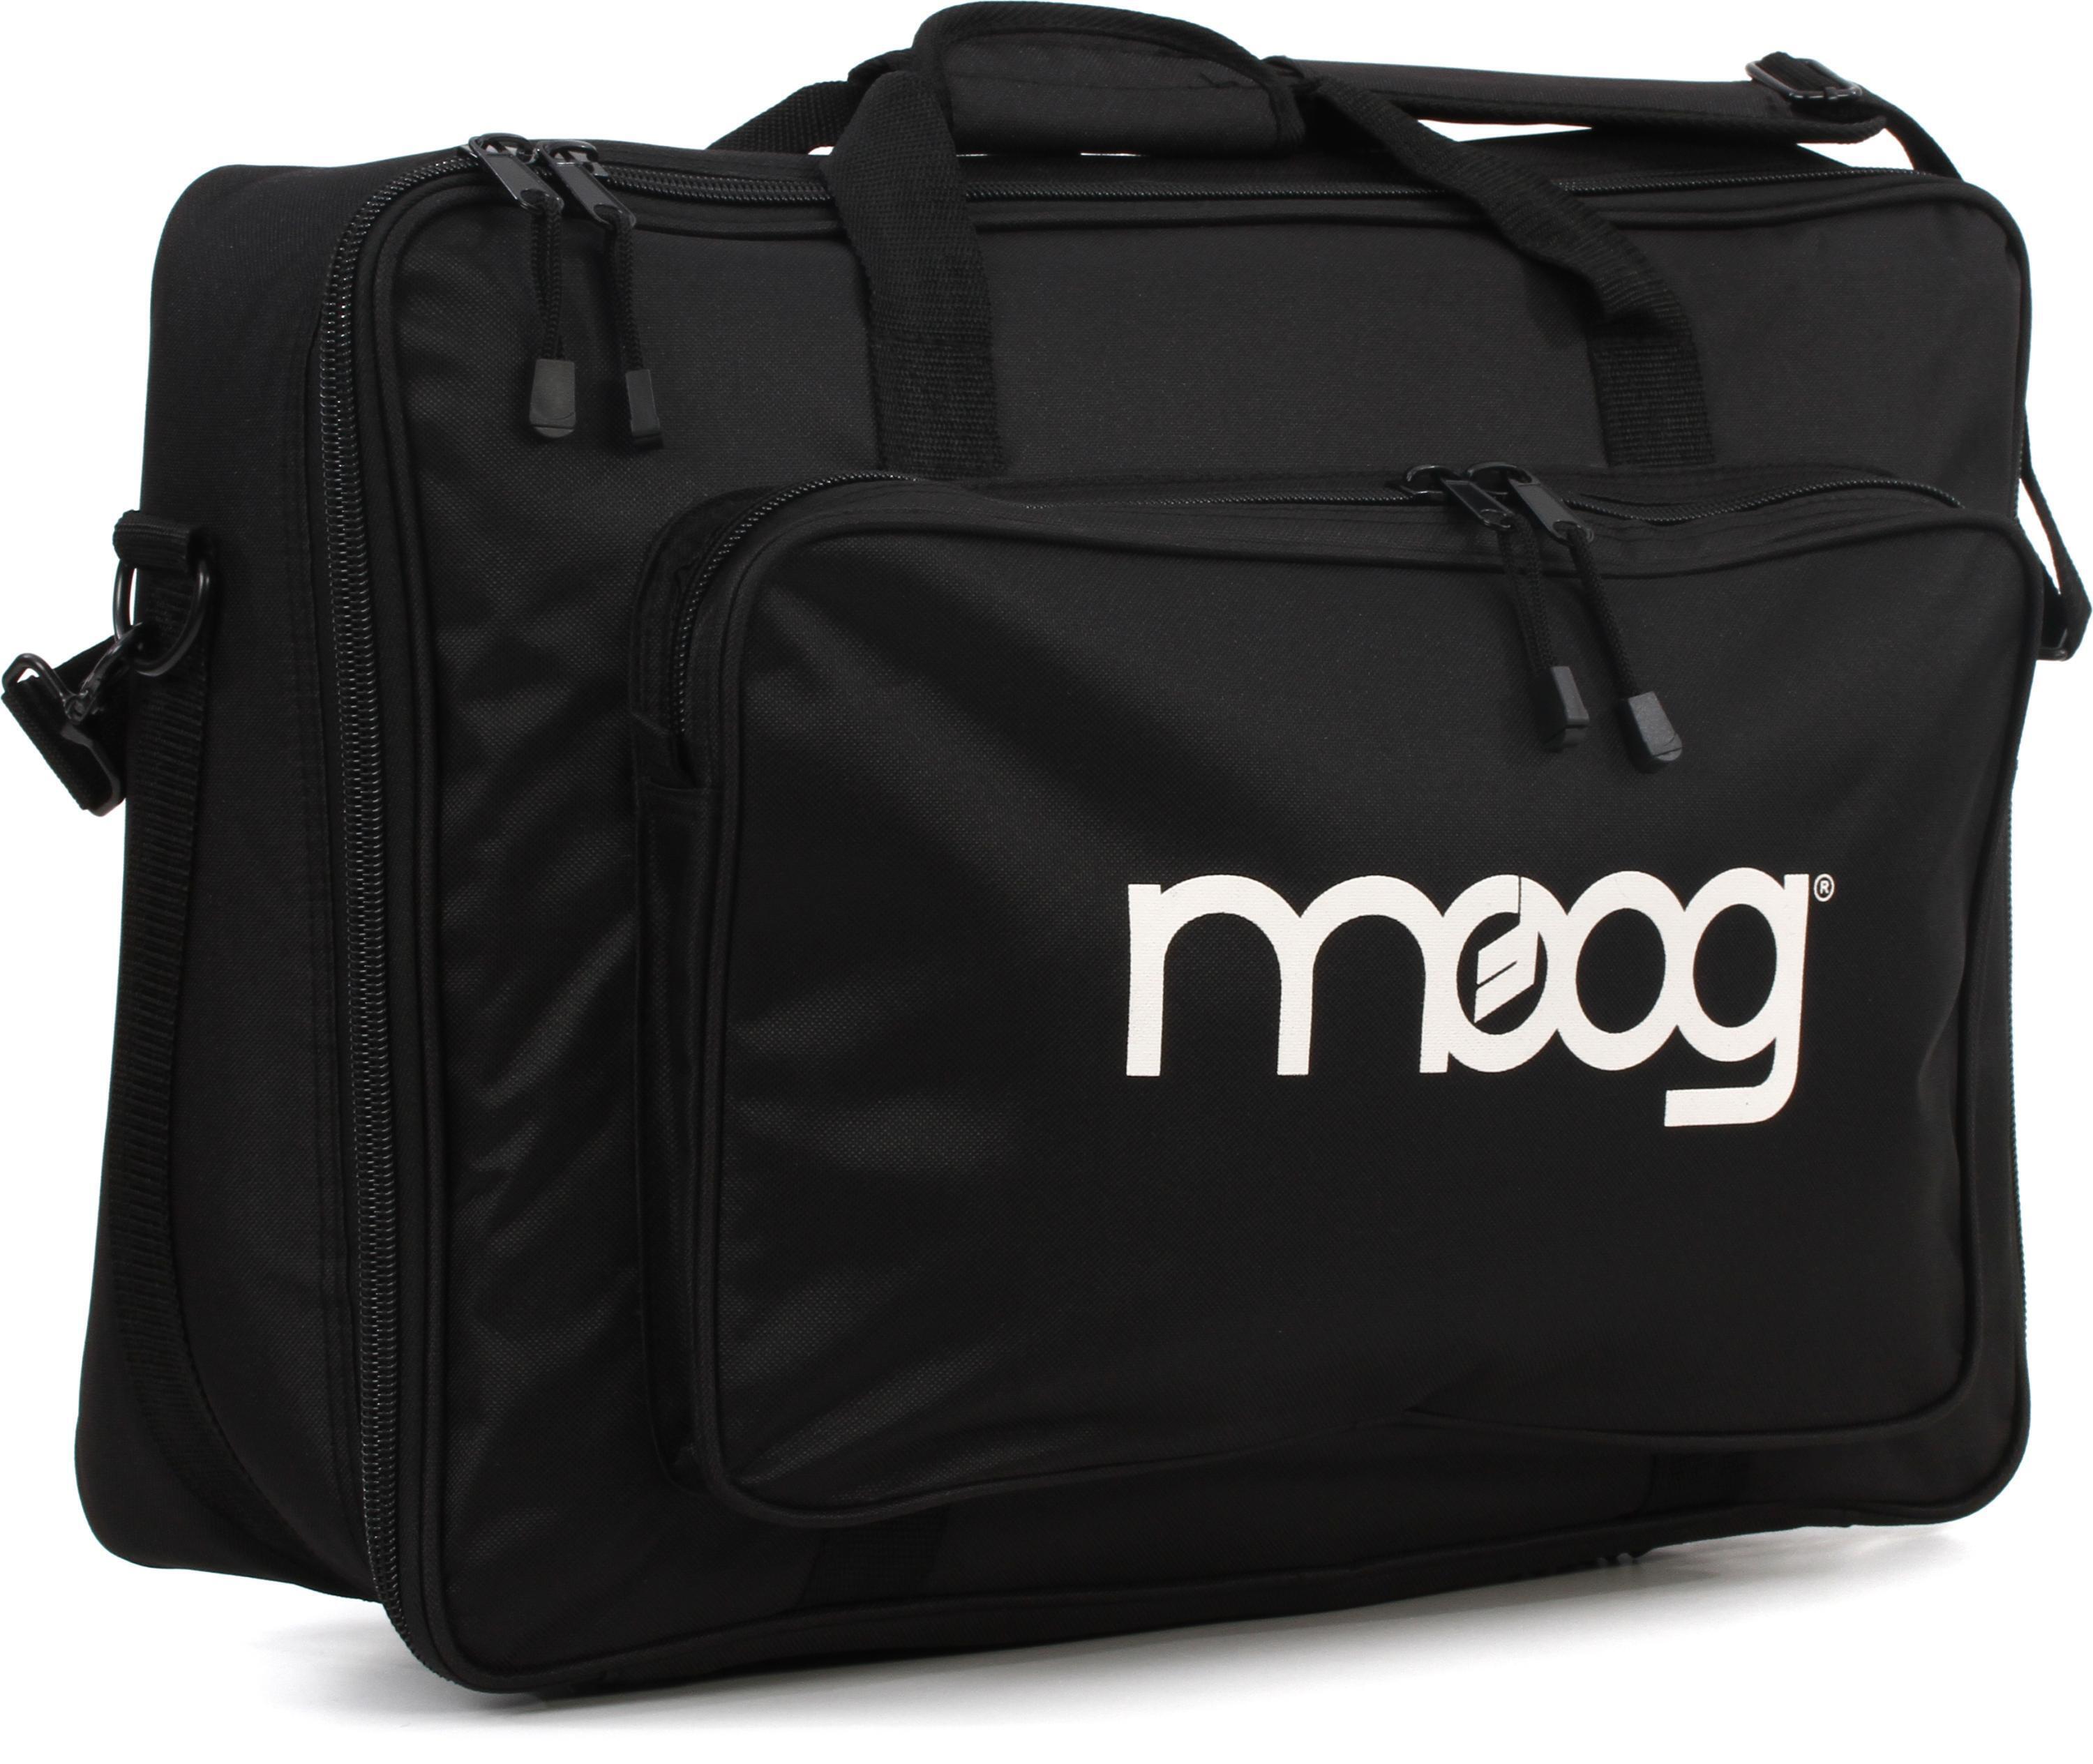 Moog Sub Phatty Gig Bag - Padded Carrying Case